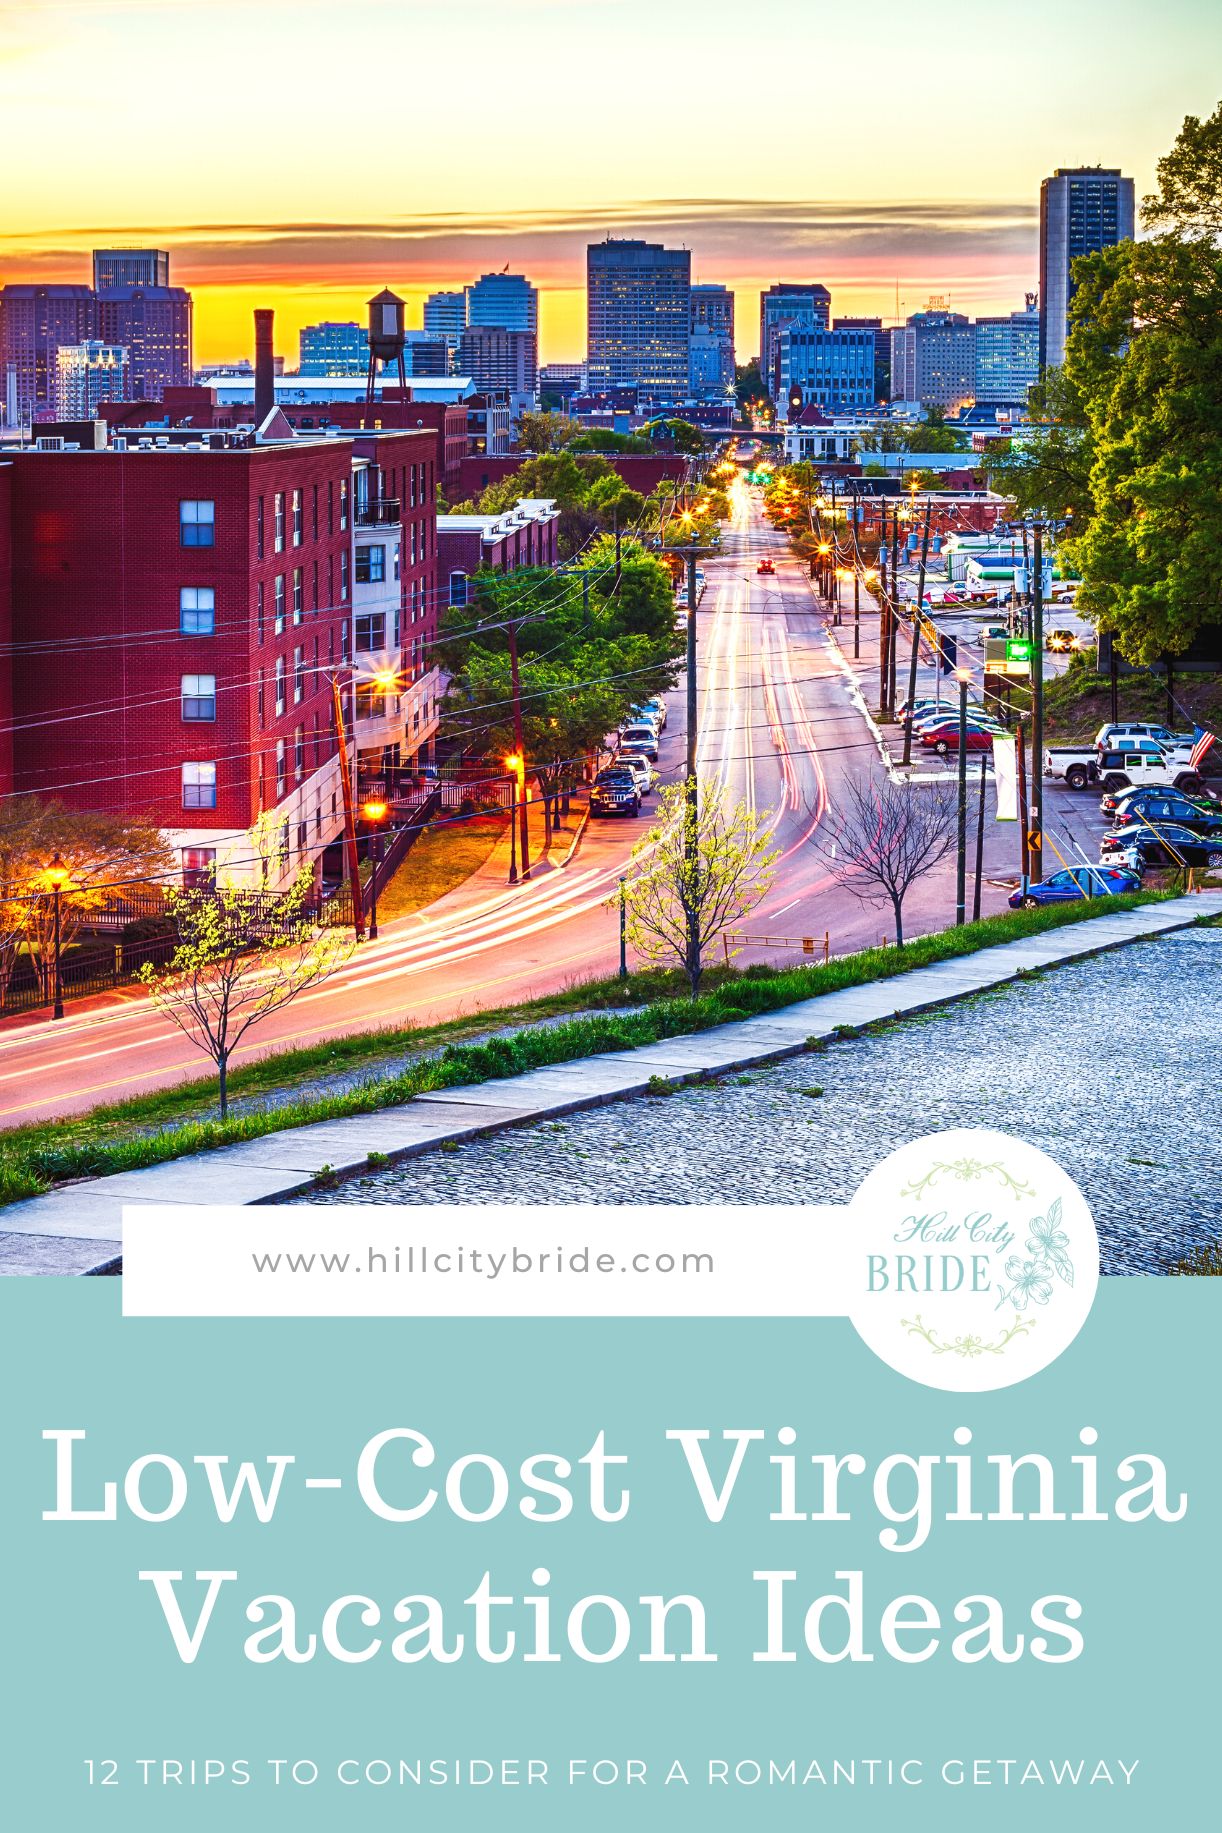 Low Cost Vacation Ideas in Virginia